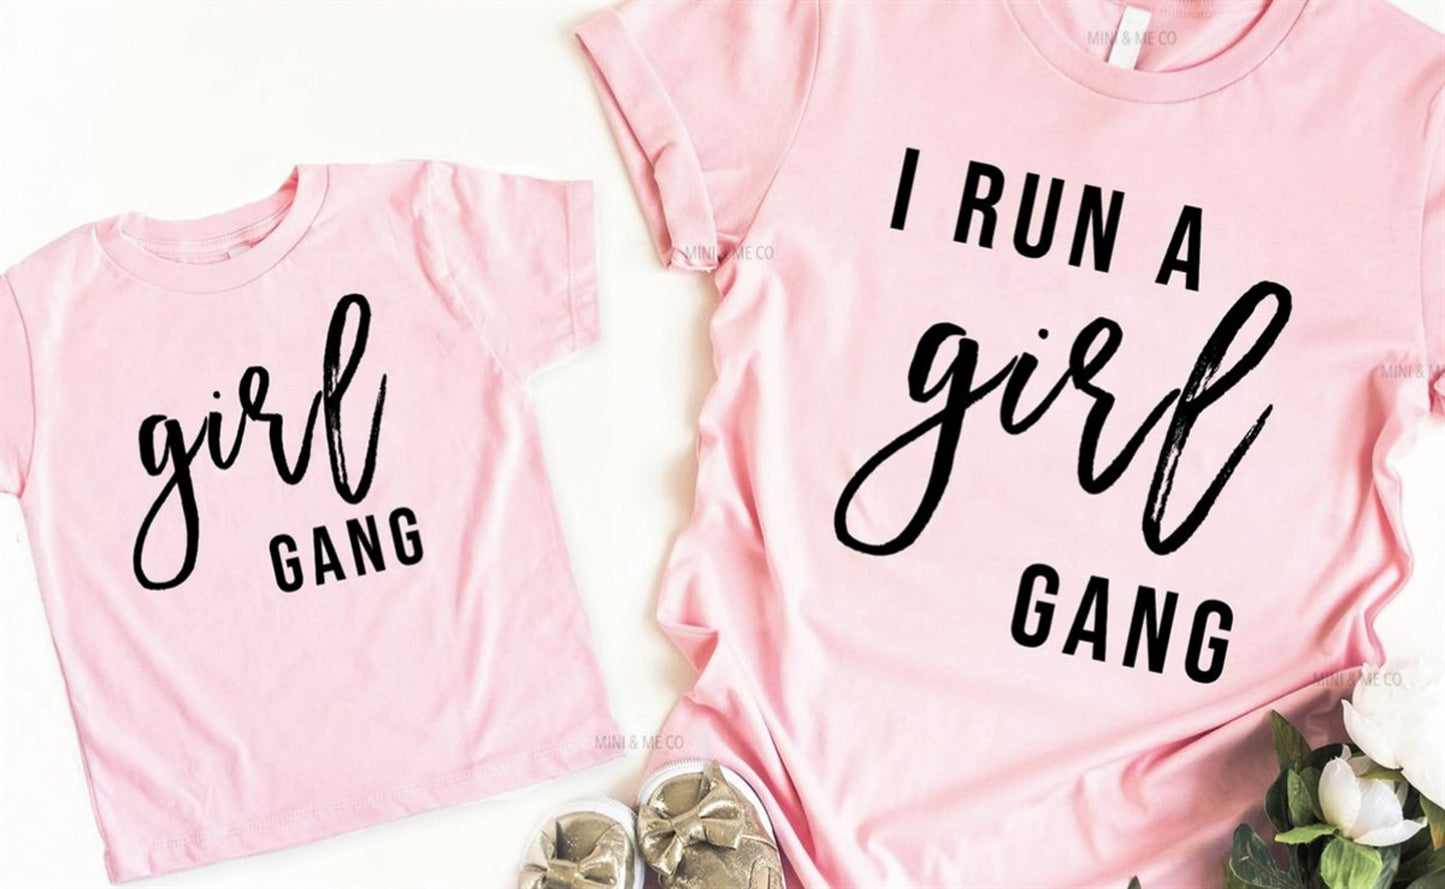 Girl Gang Tee